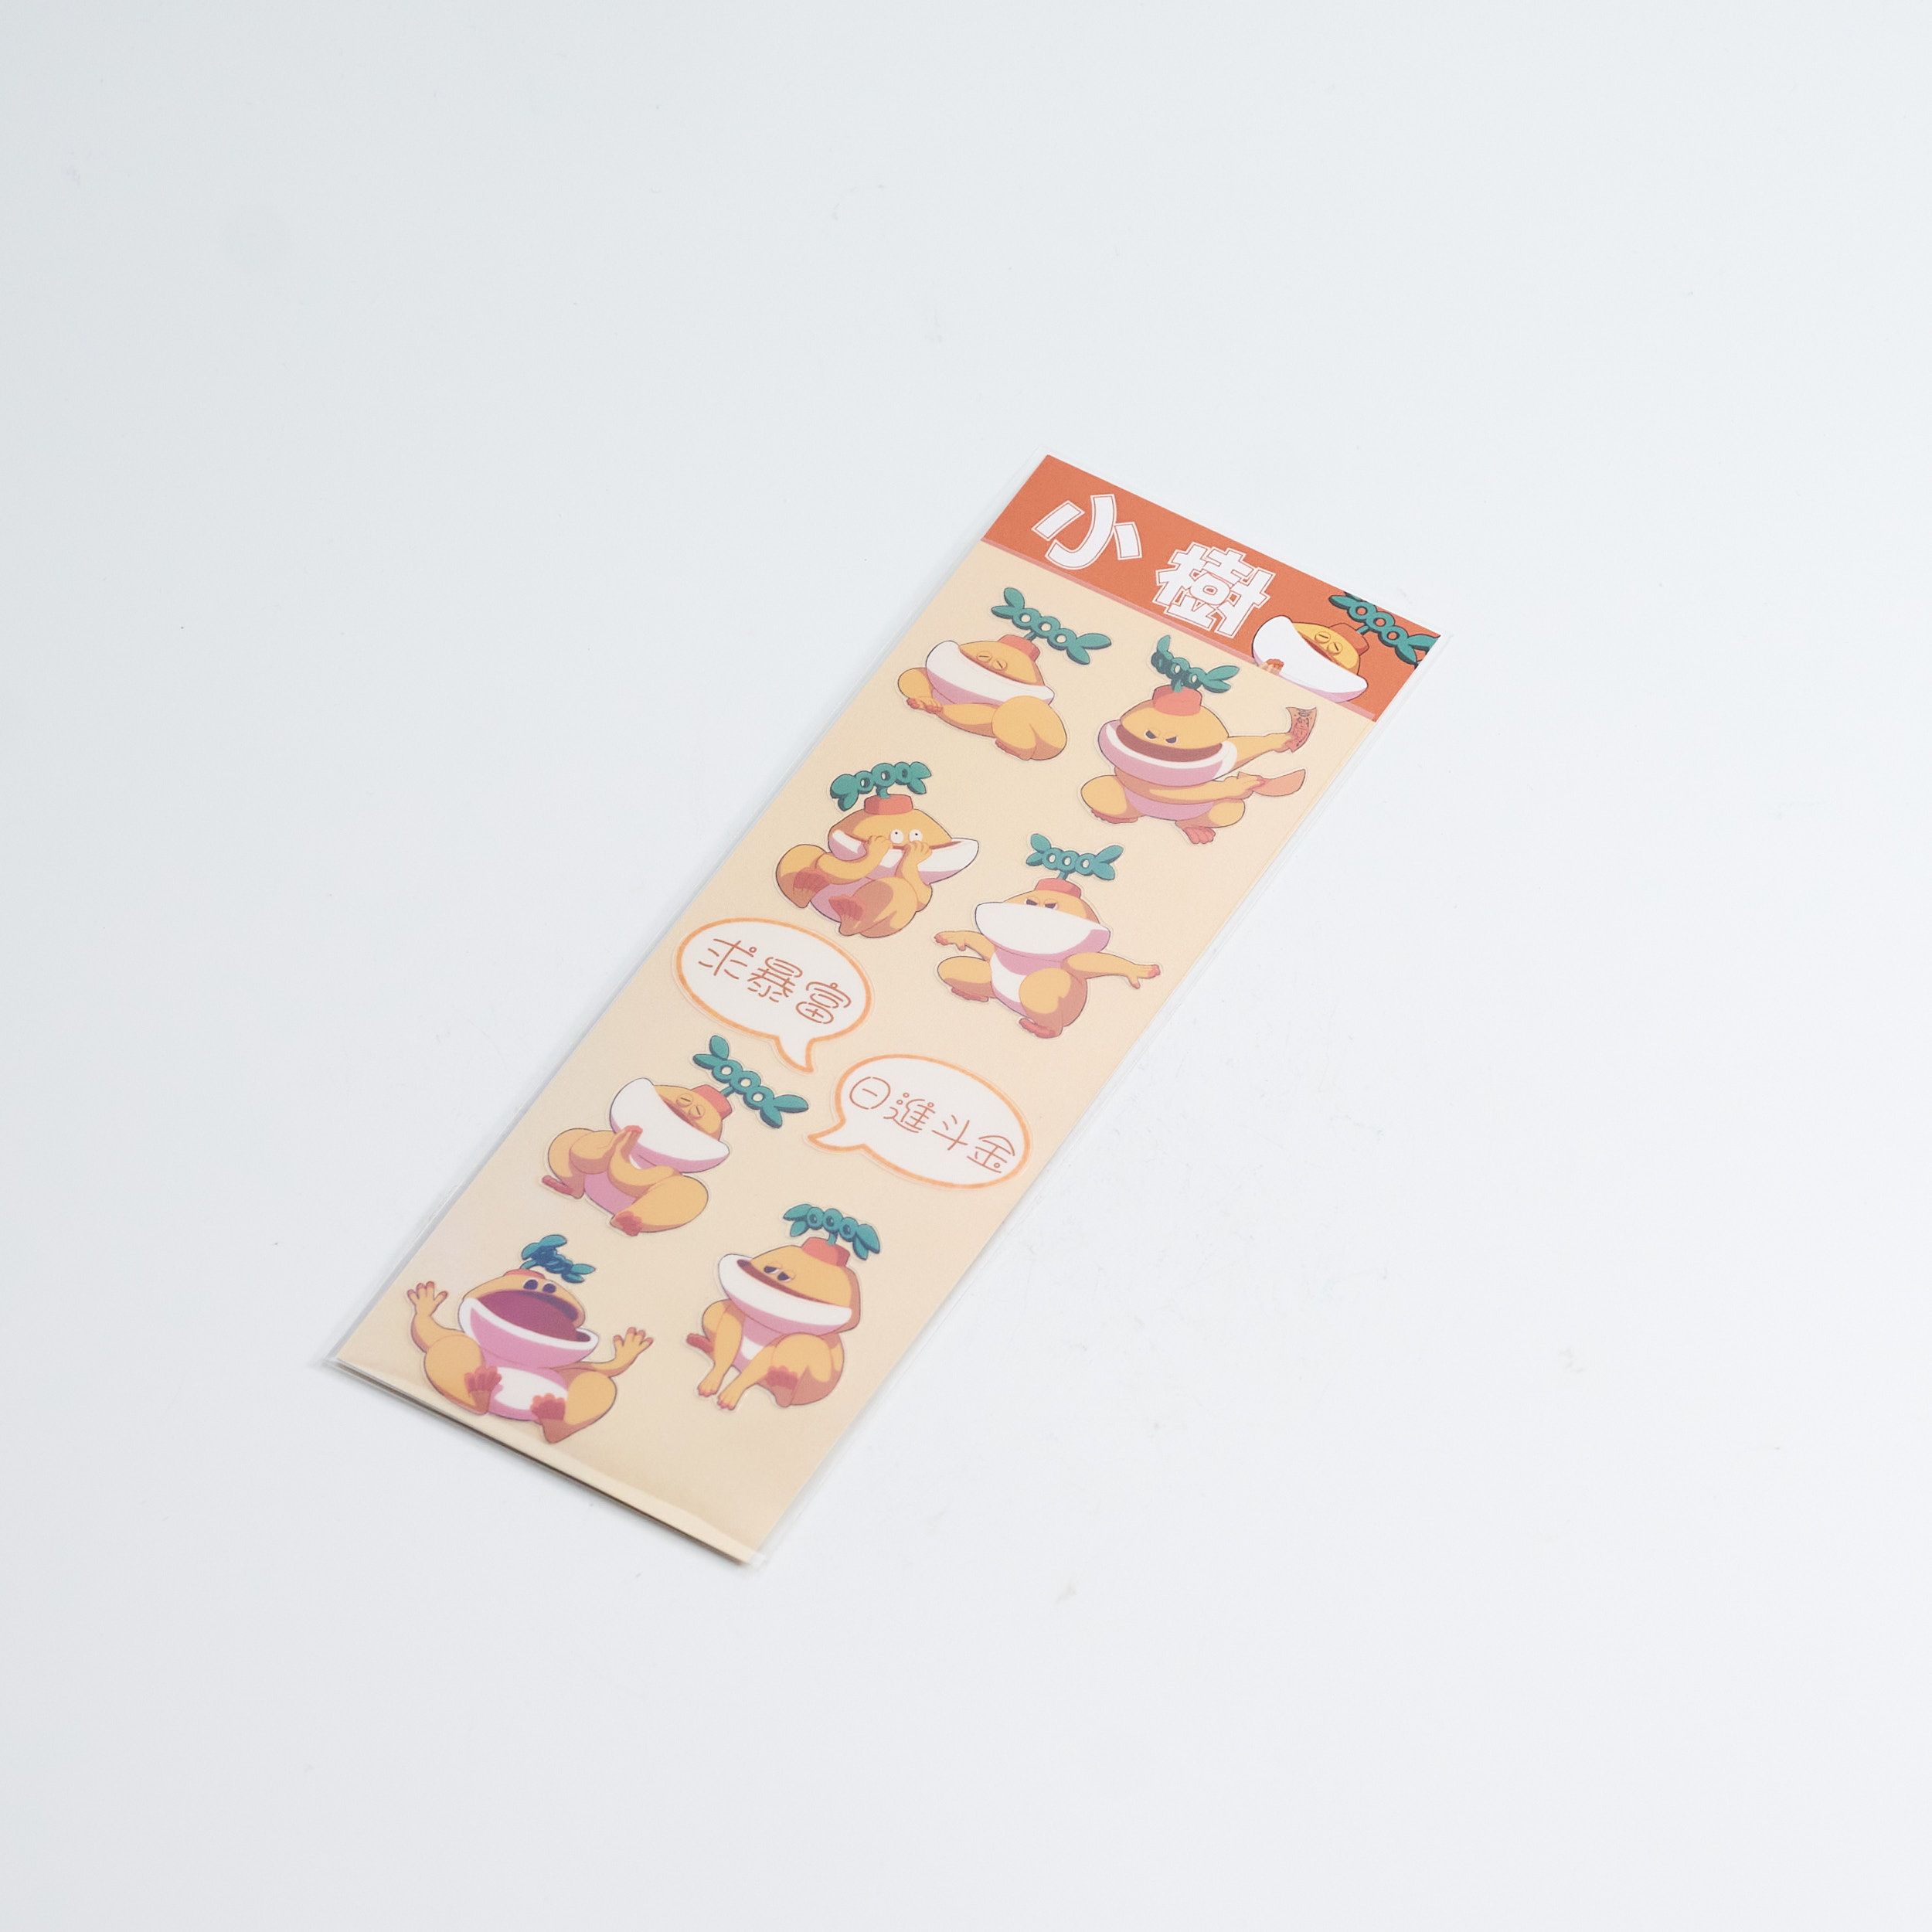 小樹透明角色貼紙 Character Stickers- Otis